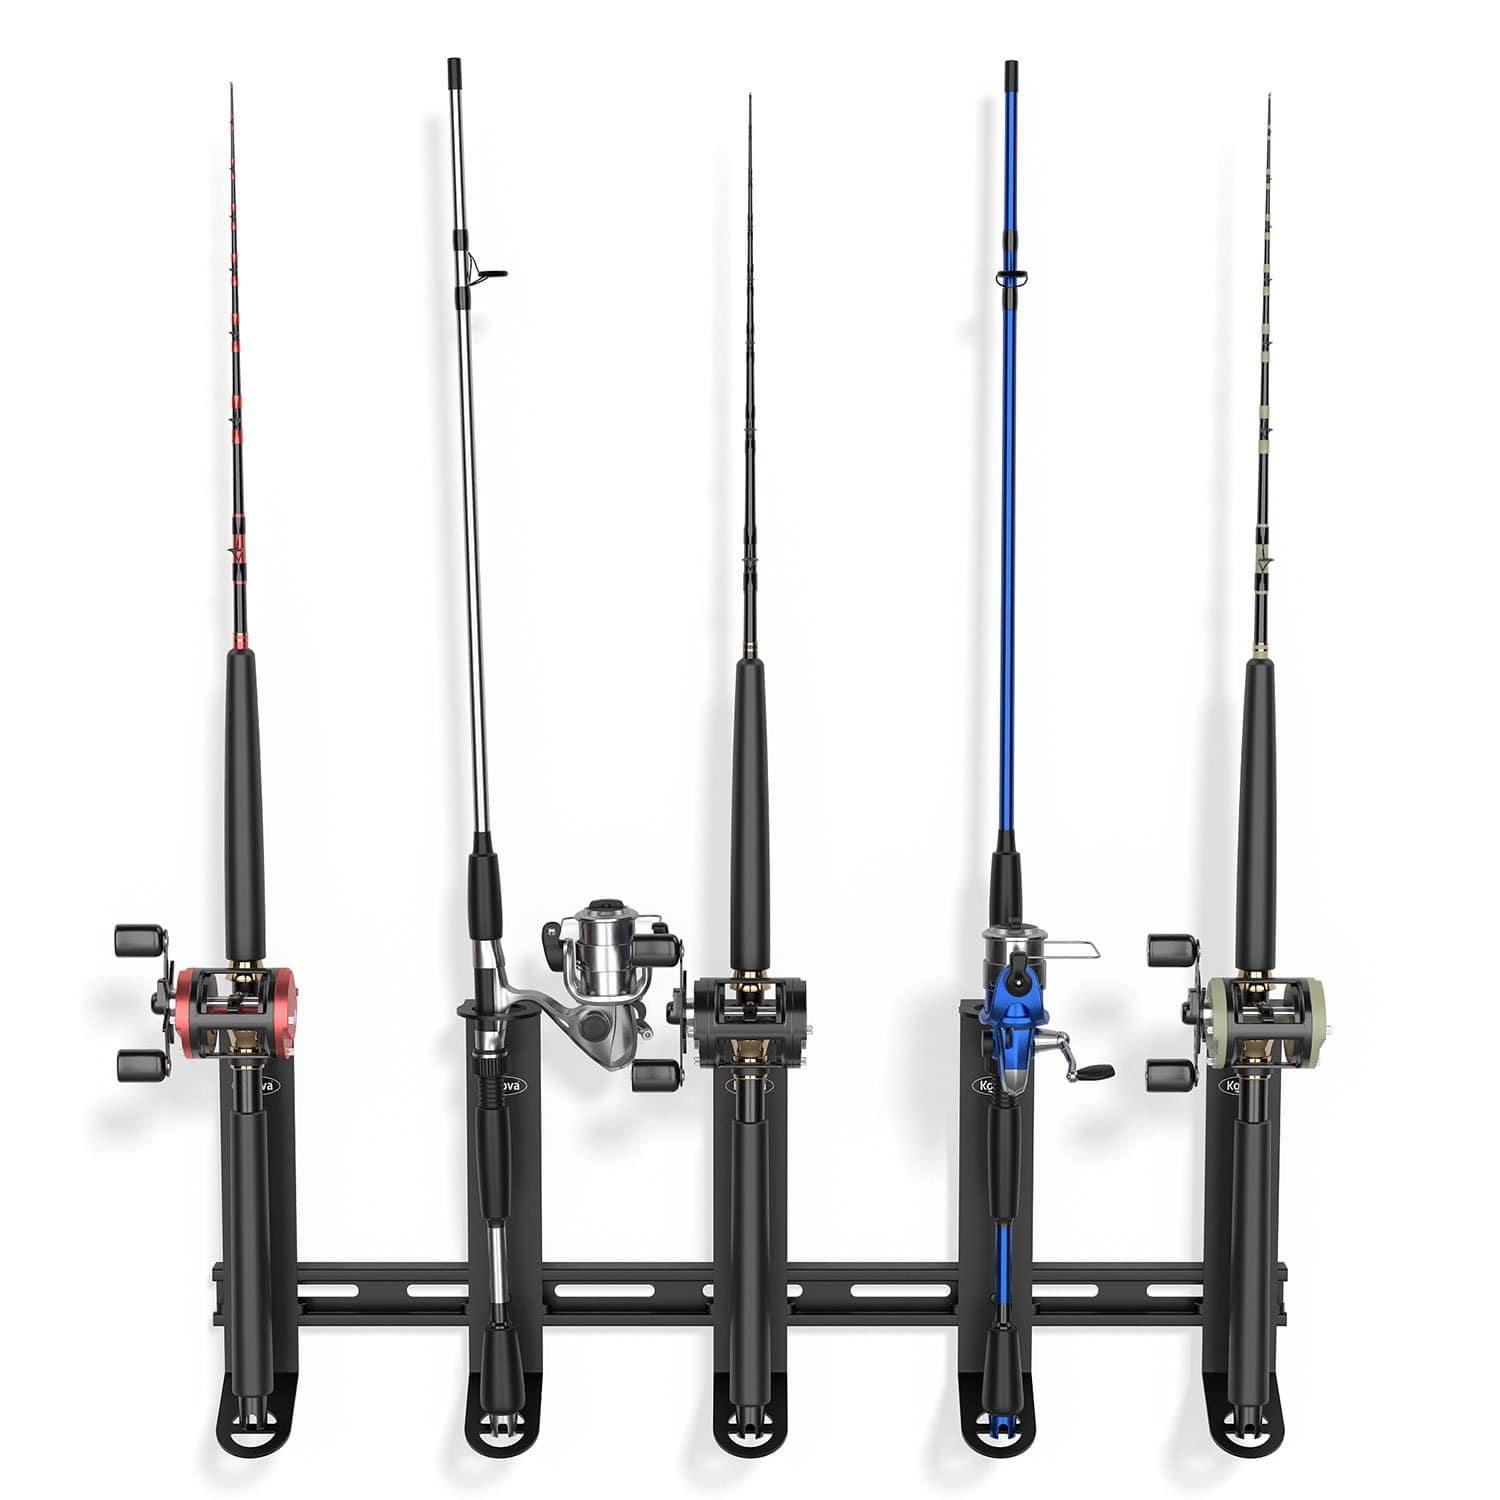 High quality PVC Insert Protectors for Fishing Rod Holders racks